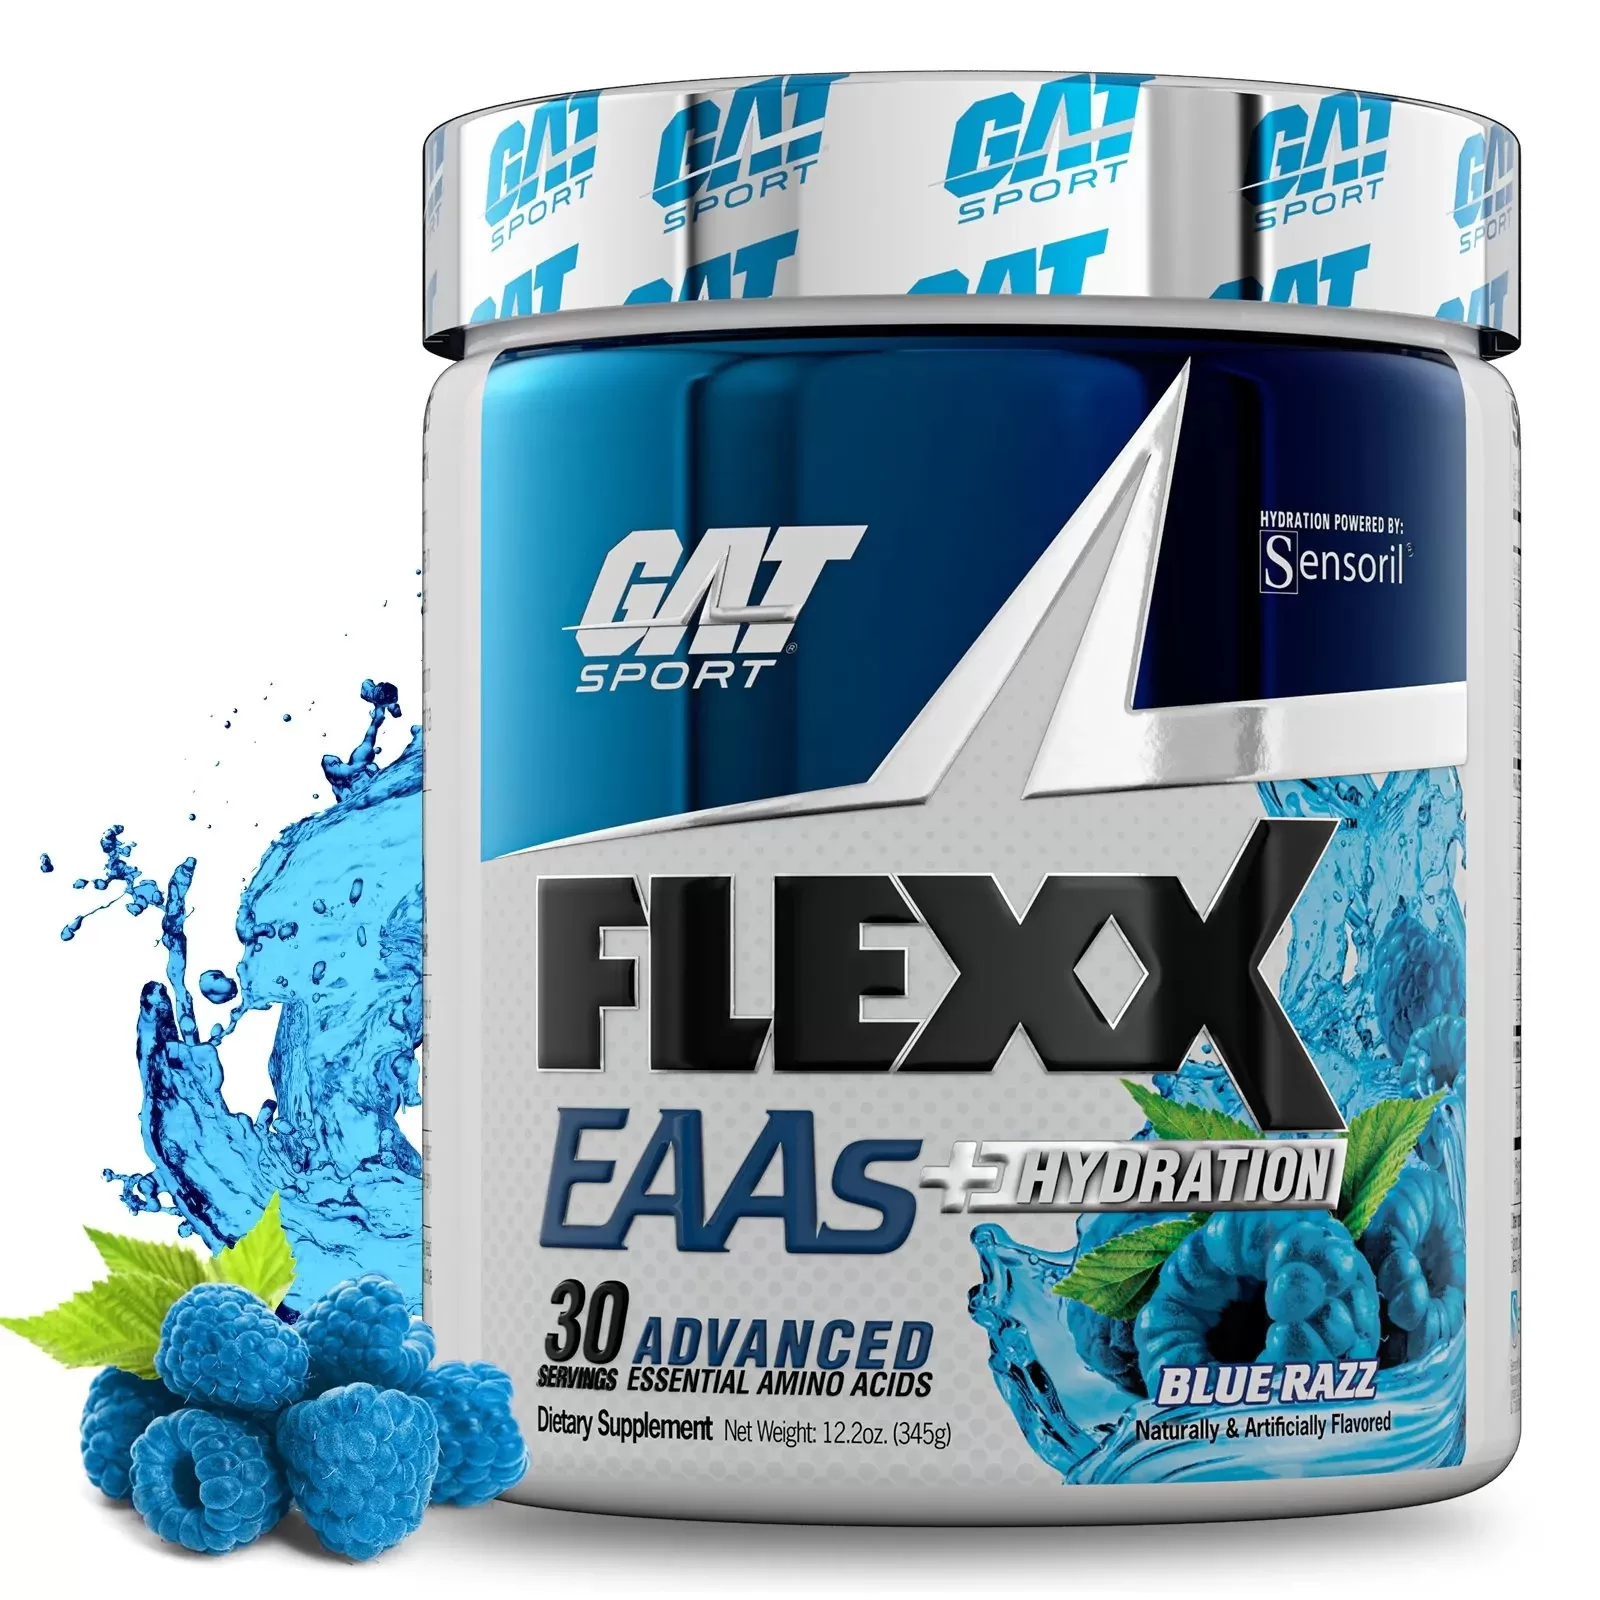 GAT Sport Flexx EAAs + Hydration, 345gm, 30 Servings - EAA Supplements -  Workout Essentials - Sports Nutrition